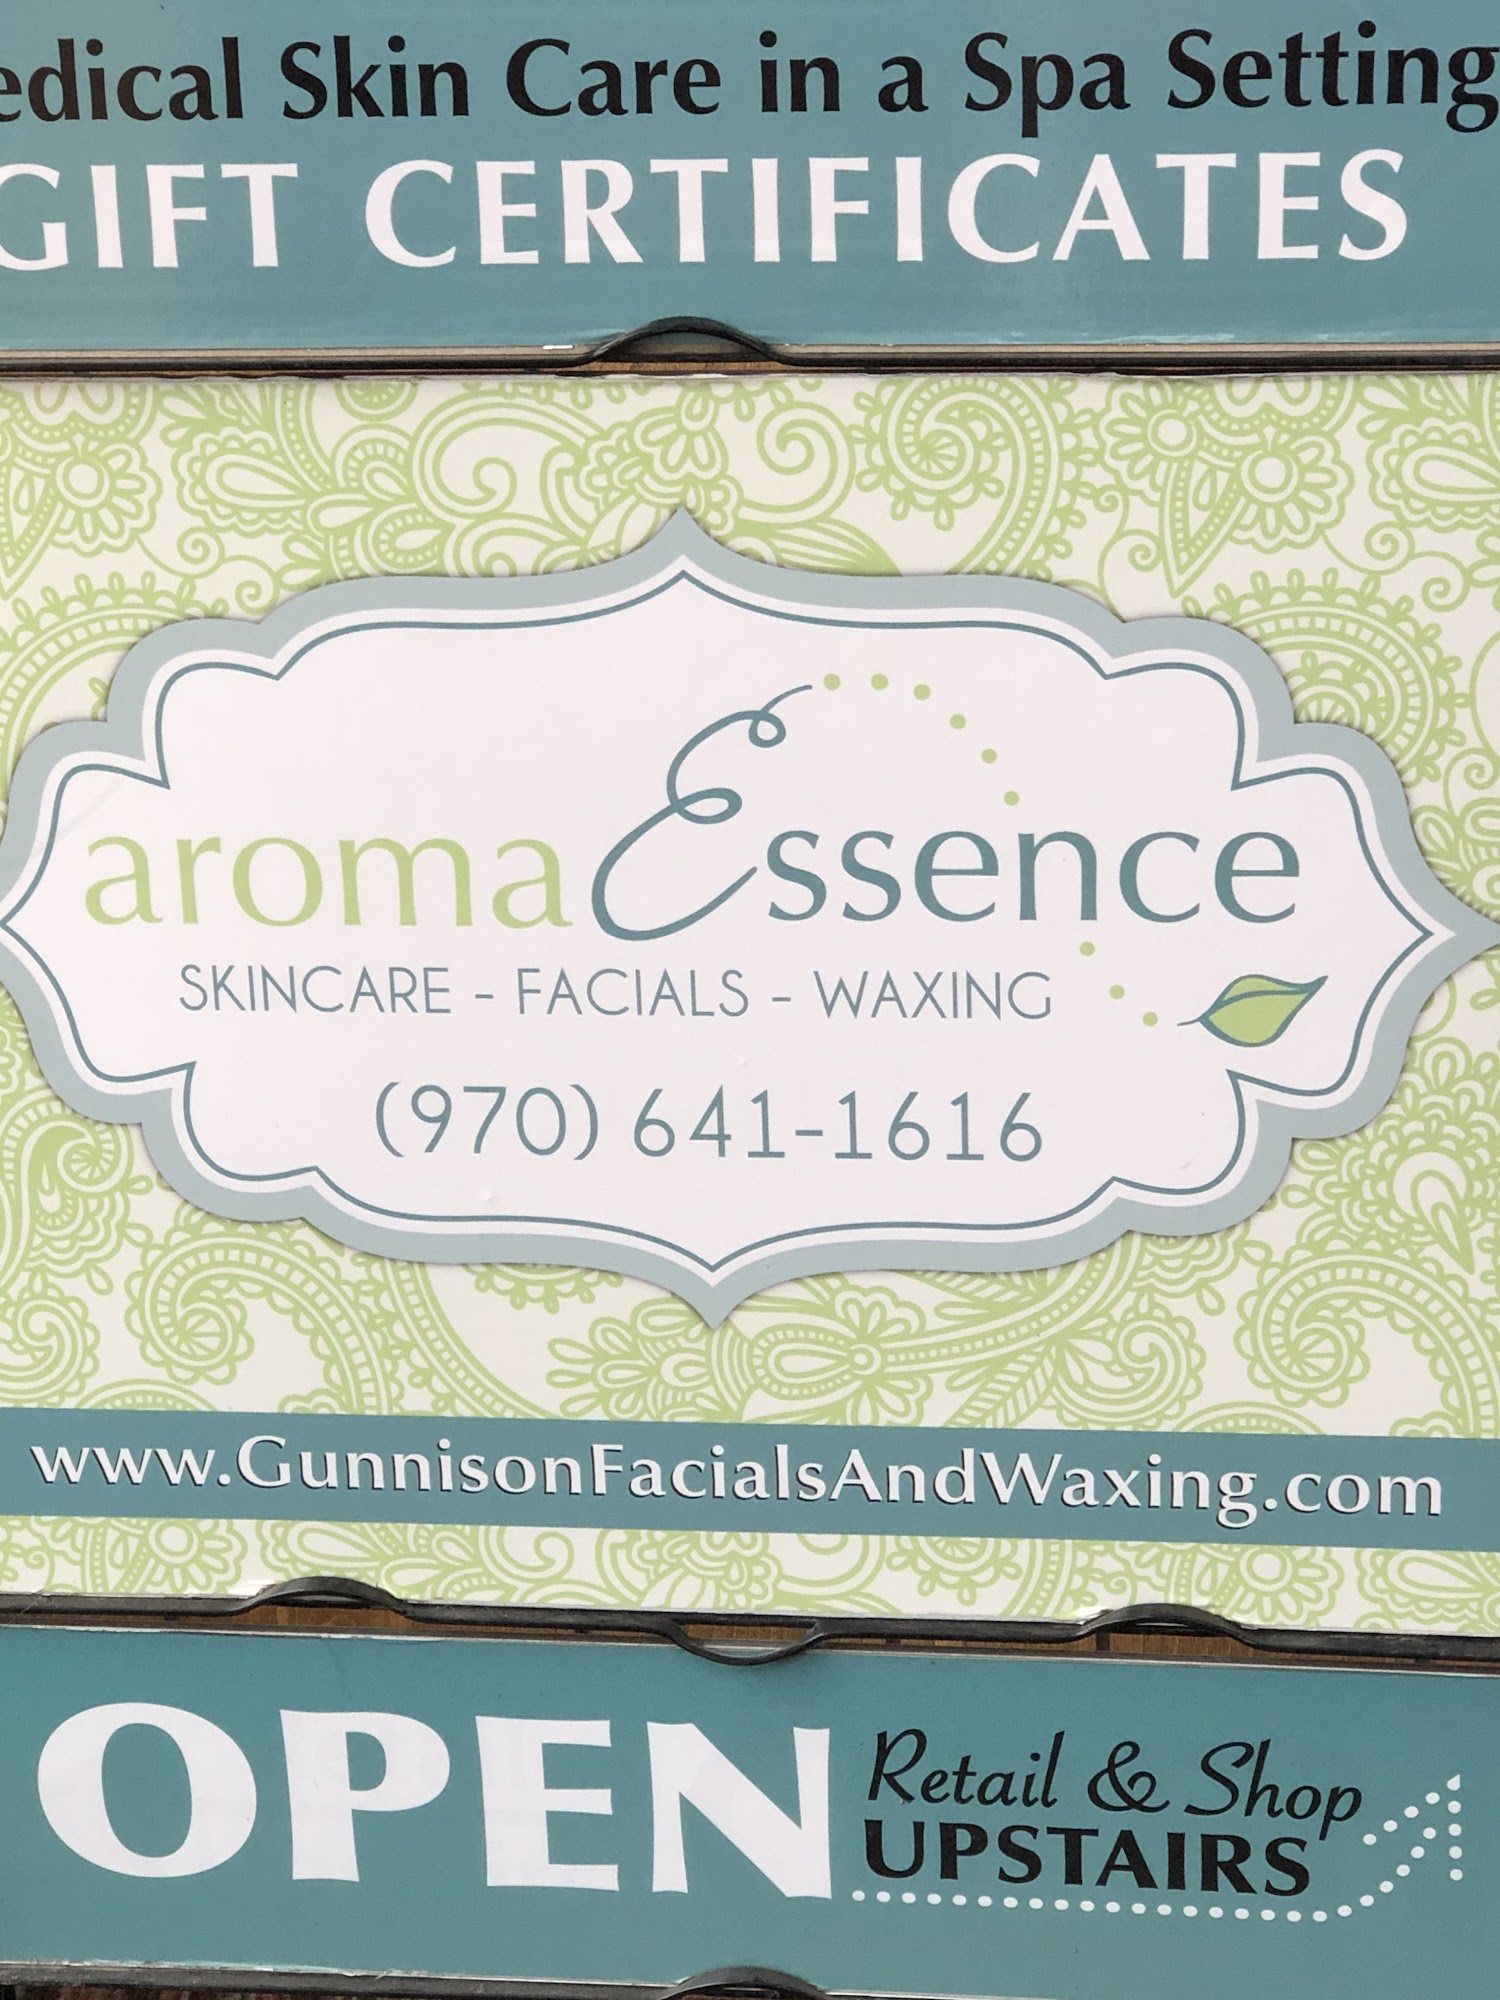 Aroma Essence Skincare, Medical Facials & Massage 307 N Main St, Gunnison Colorado 81230